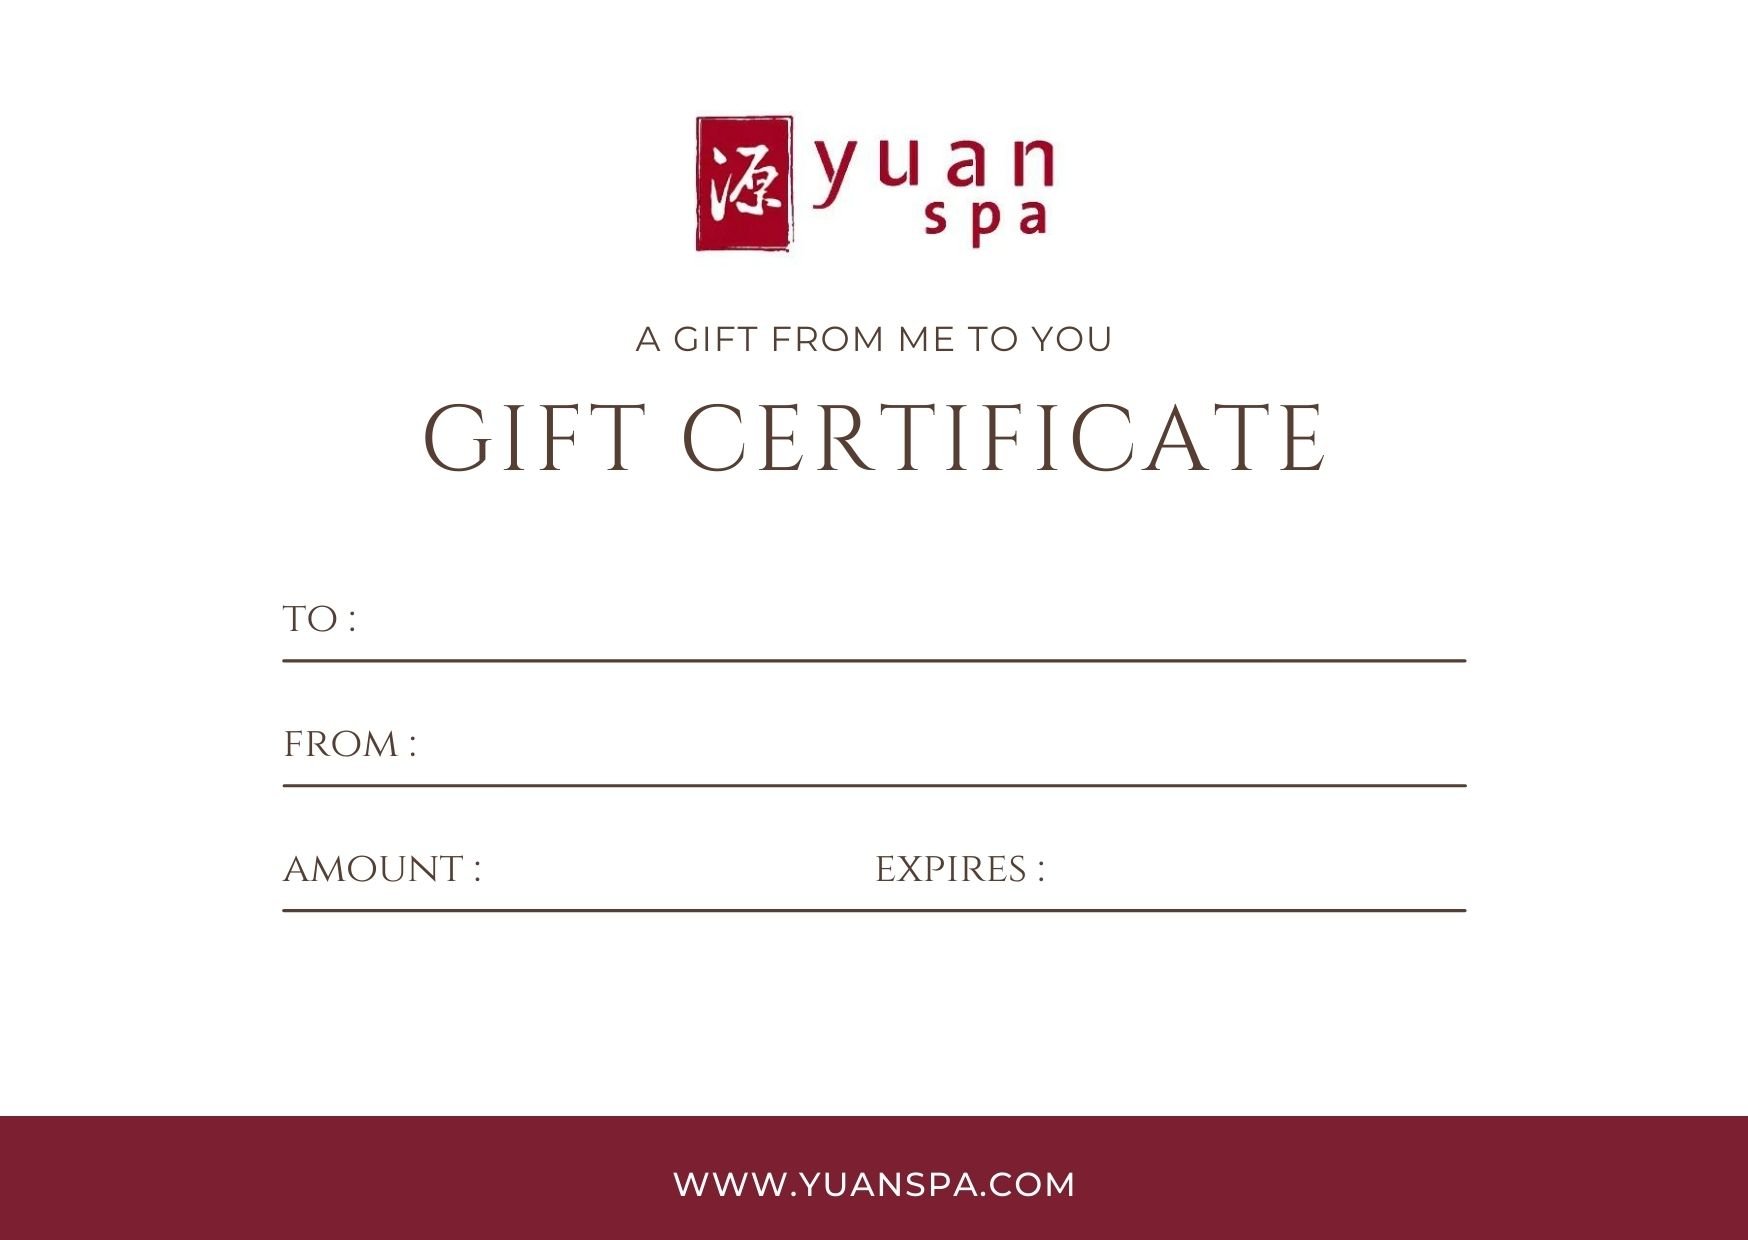 Yuan Spa Certificate.jpeg